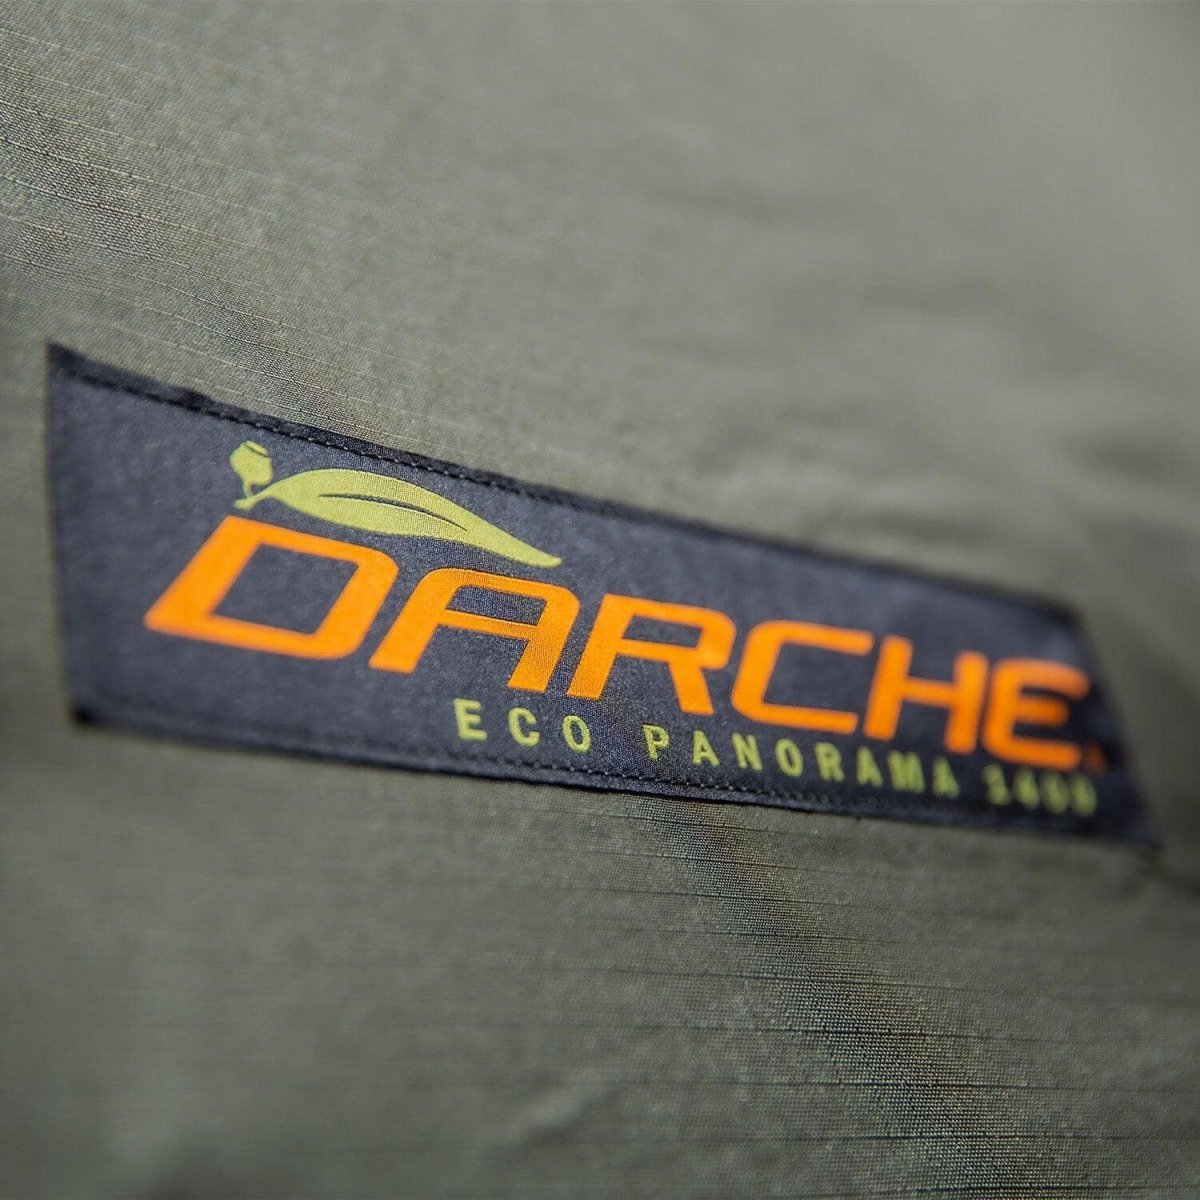 Darche Eco Panorama 1400 RTT - NZ Offroader